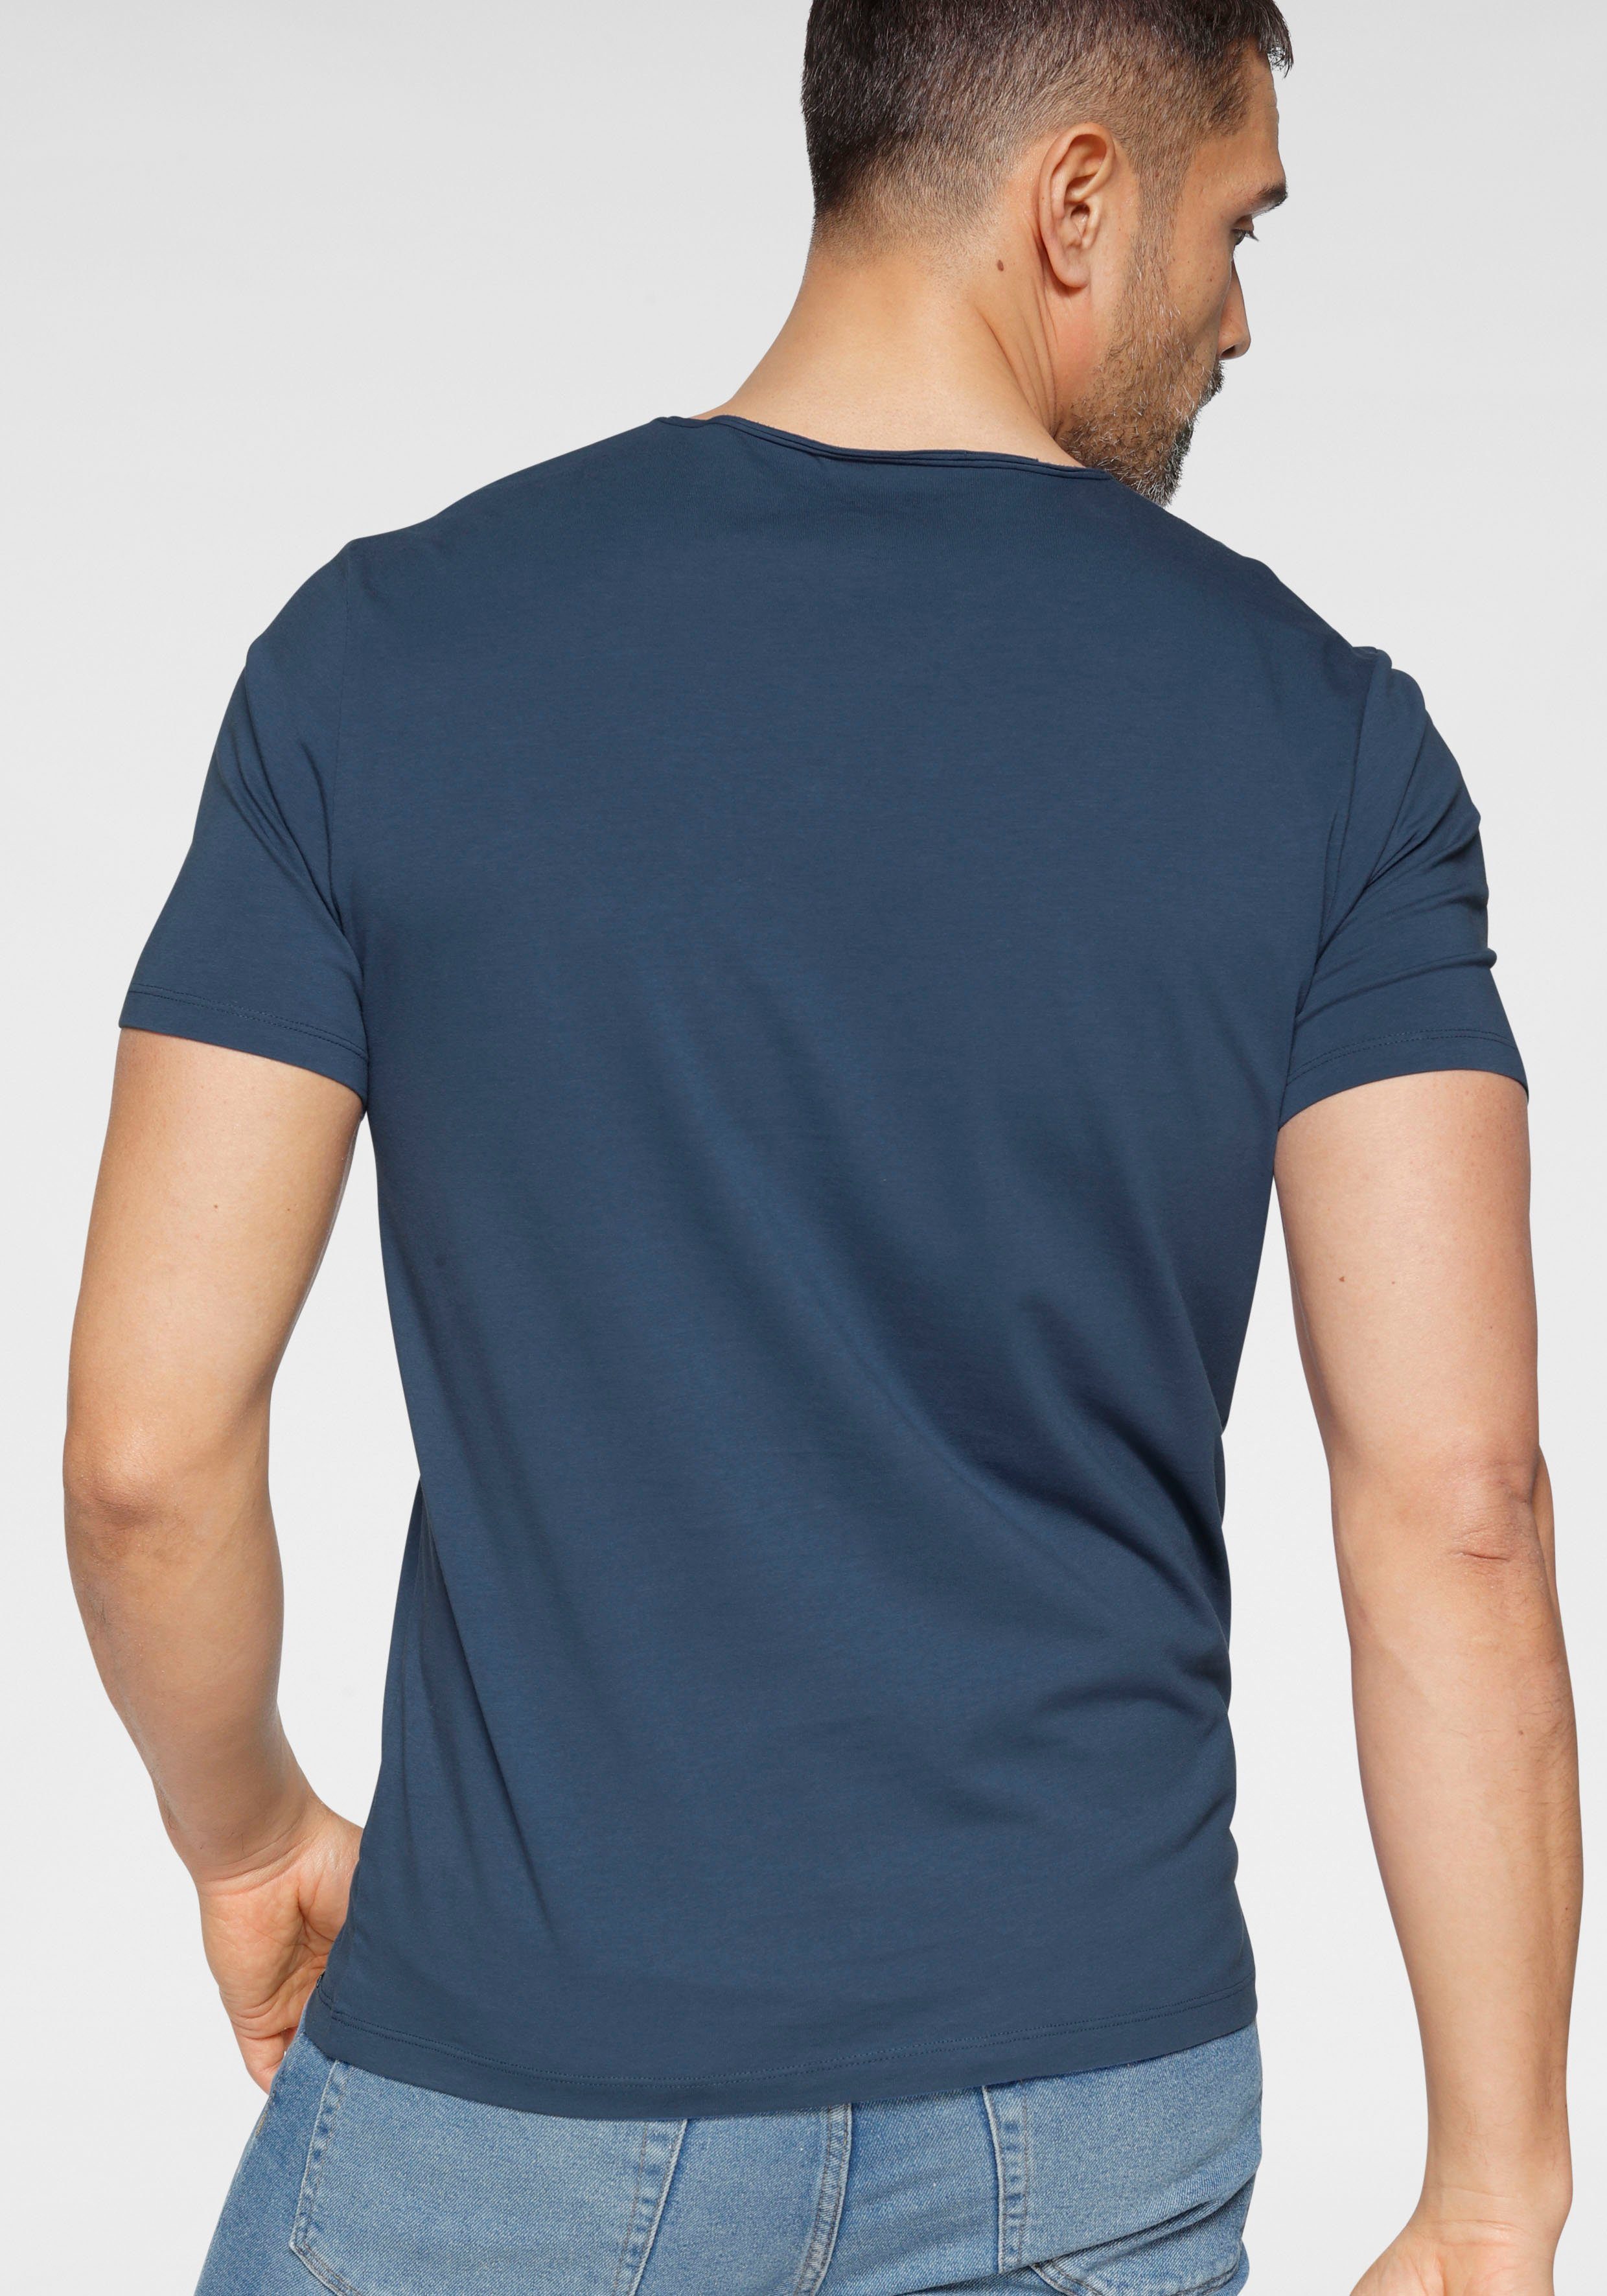 T-Shirt feinem fit body OLYMP aus Level indigo Jersey Five